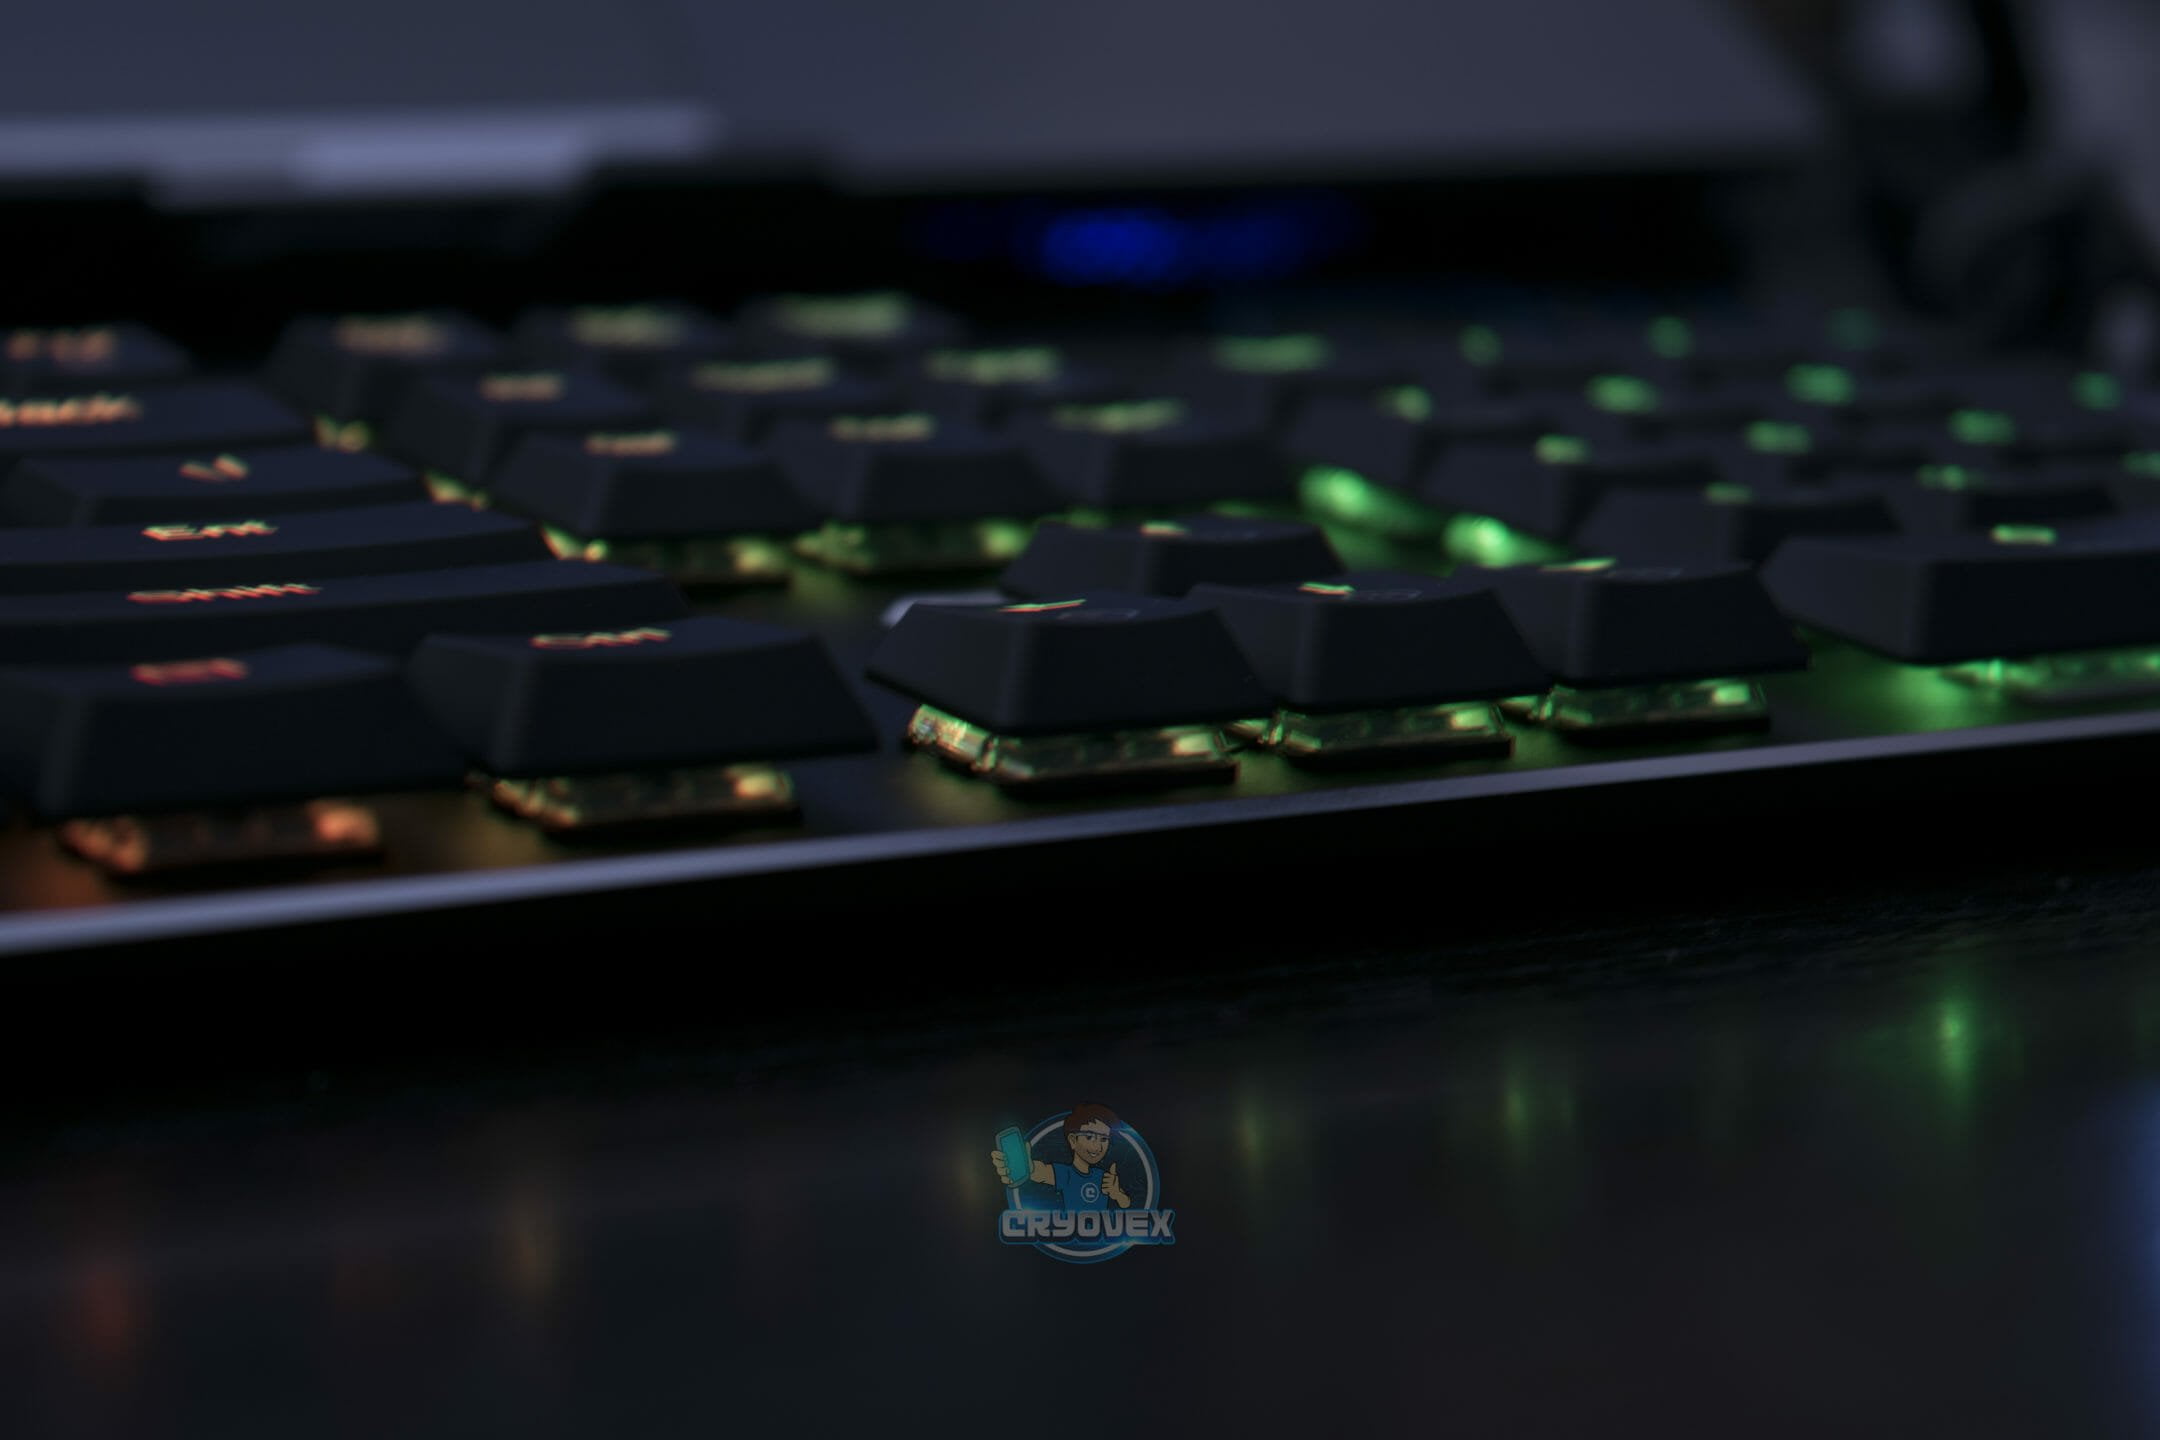 Mechanical Gaming Keyboard Under $100 With Rgb Lighting?